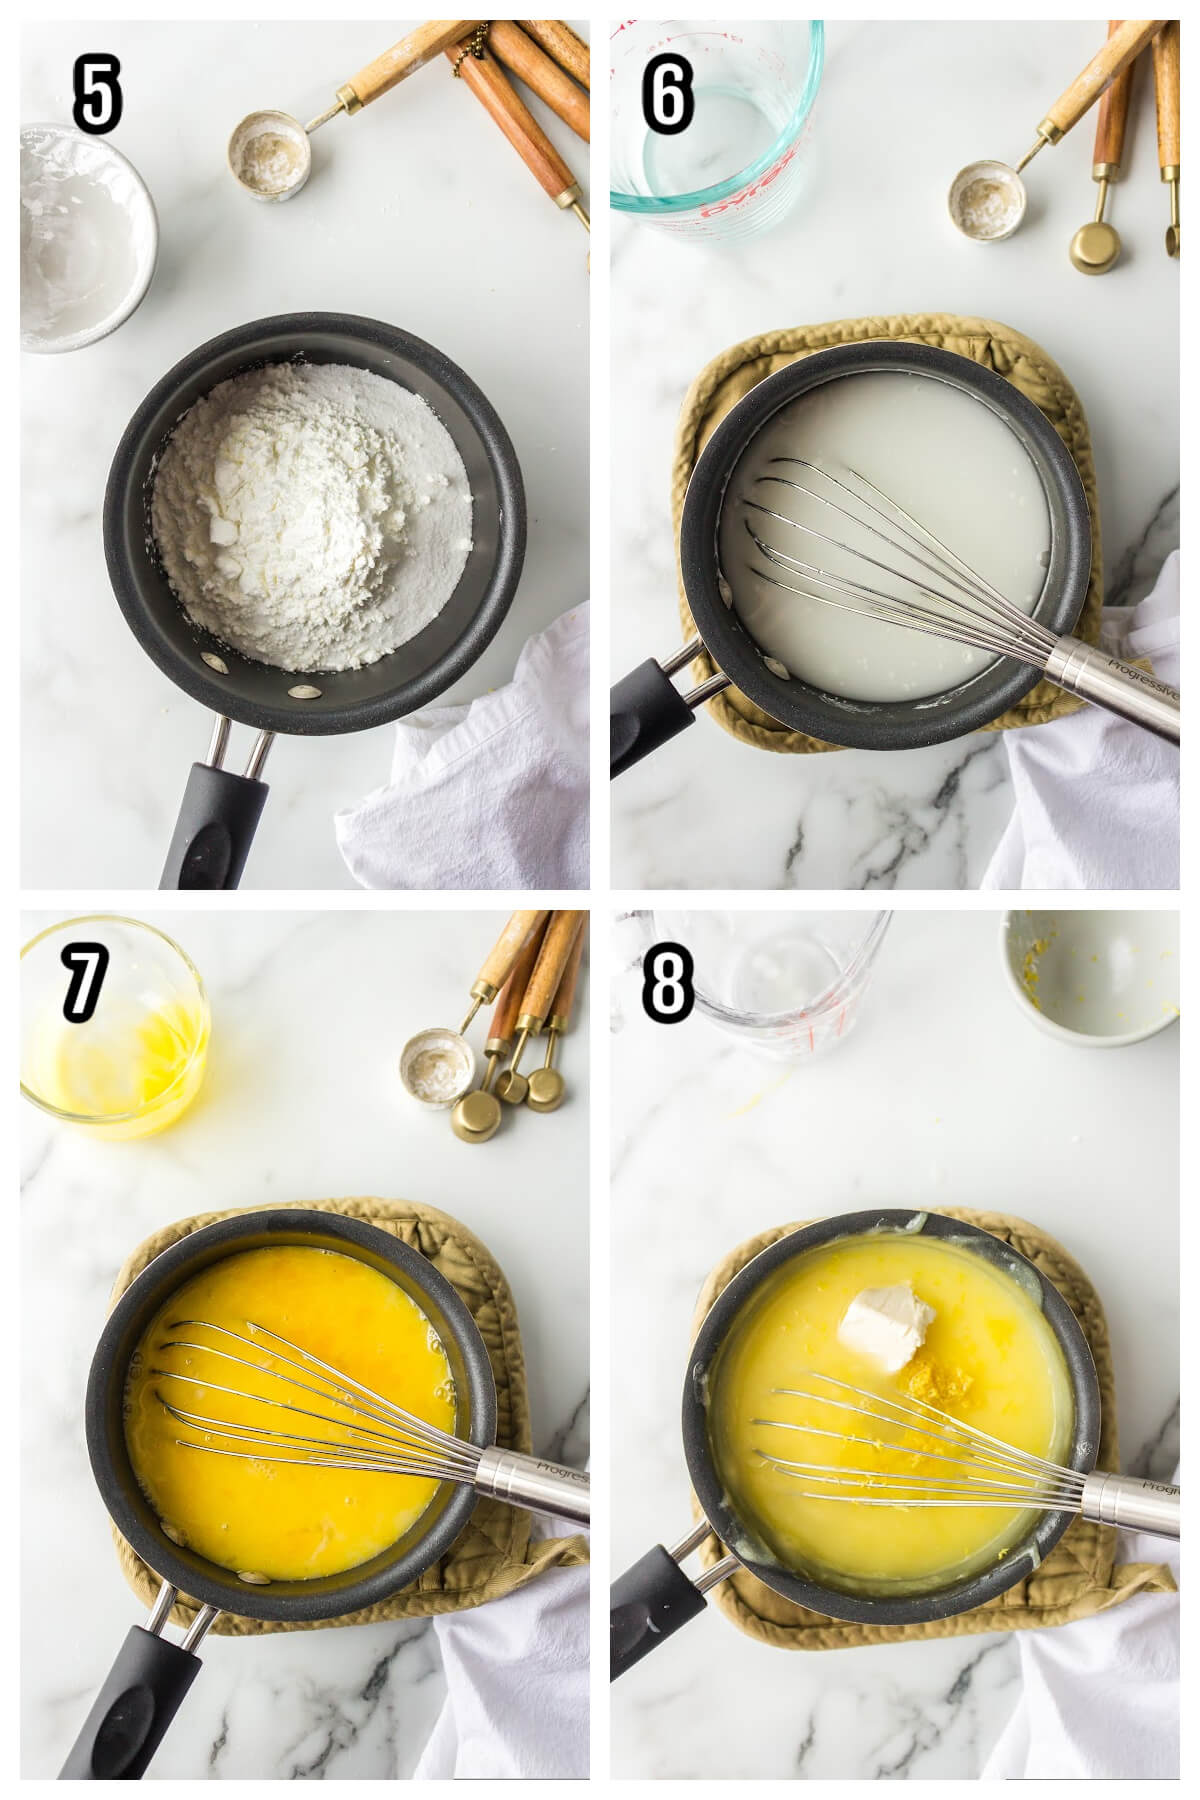 Second set of steps to make Lemon Bar Tart with Biscotti crust. 